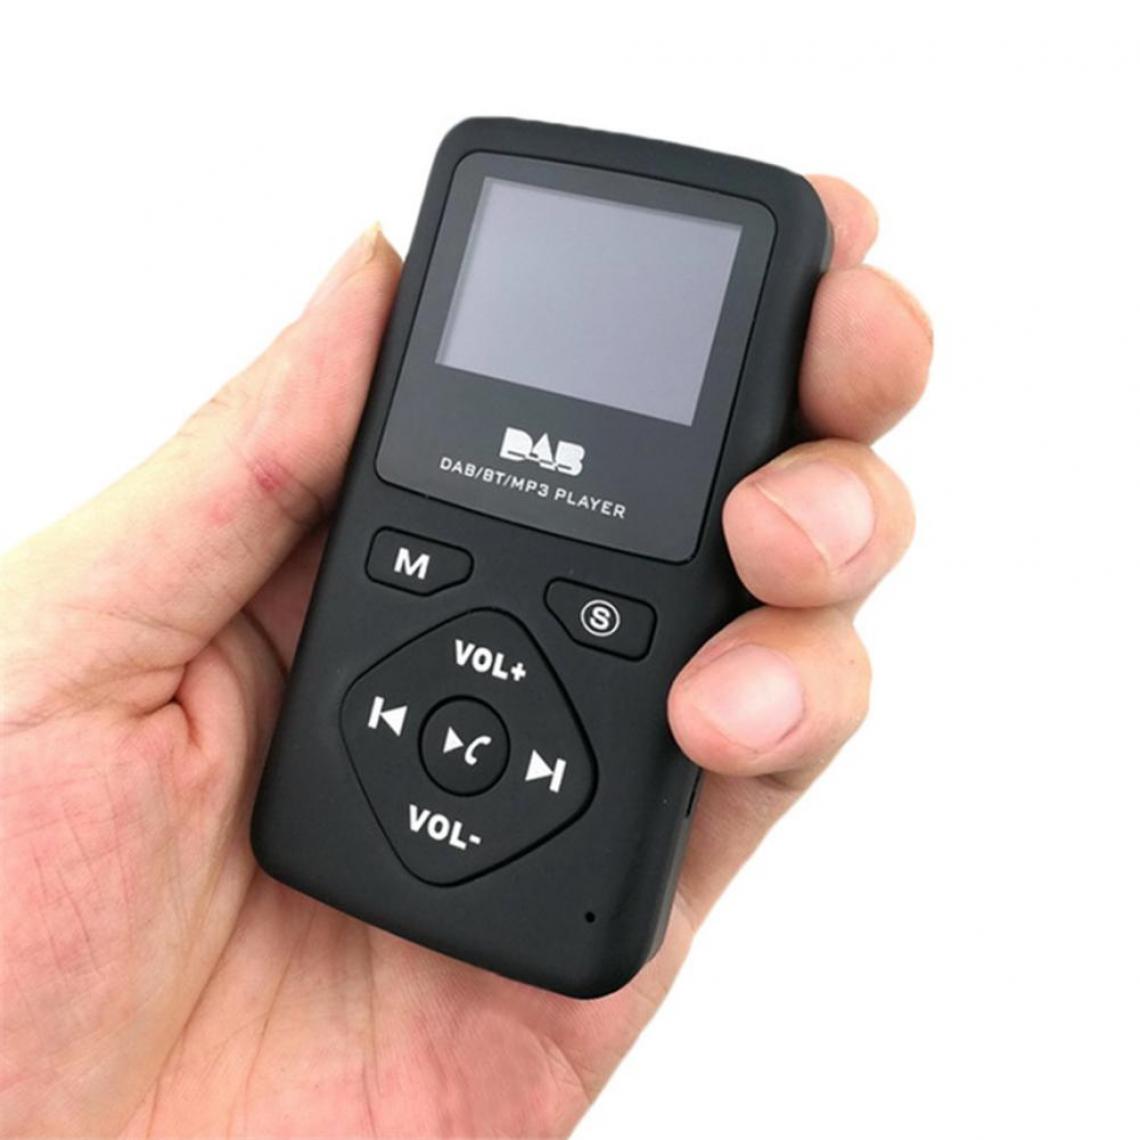 Universal - Portable Pocket Radio Digital Bluetooth MP3 Player for Randing Walking Sports with Headphones 174.928MHz 239.2MHz | - Radio